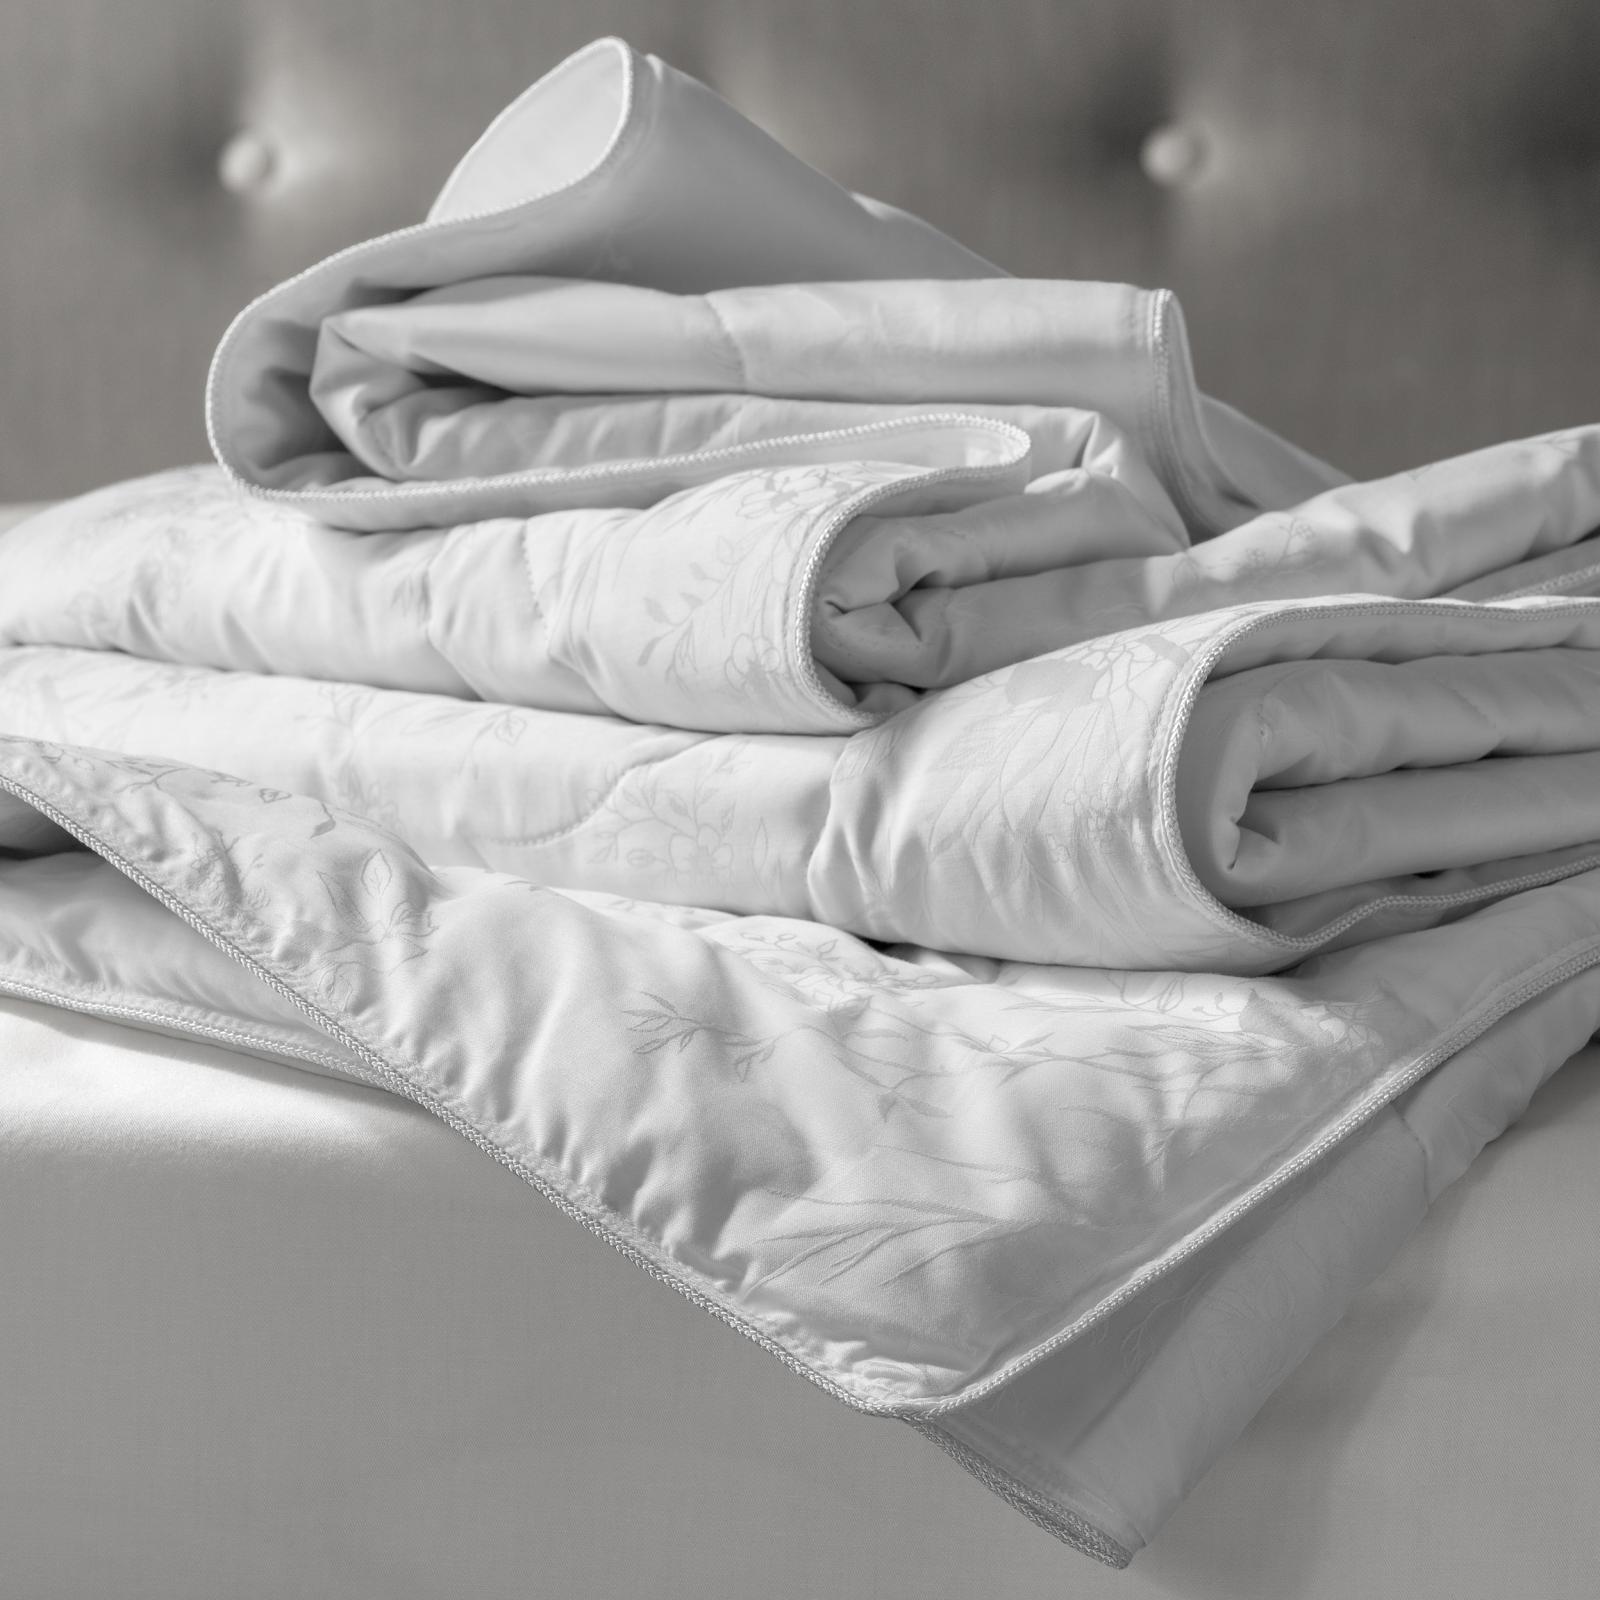 Одеяло Togas лотос 20.04.29.0003, размер 140х200 см - фото 4